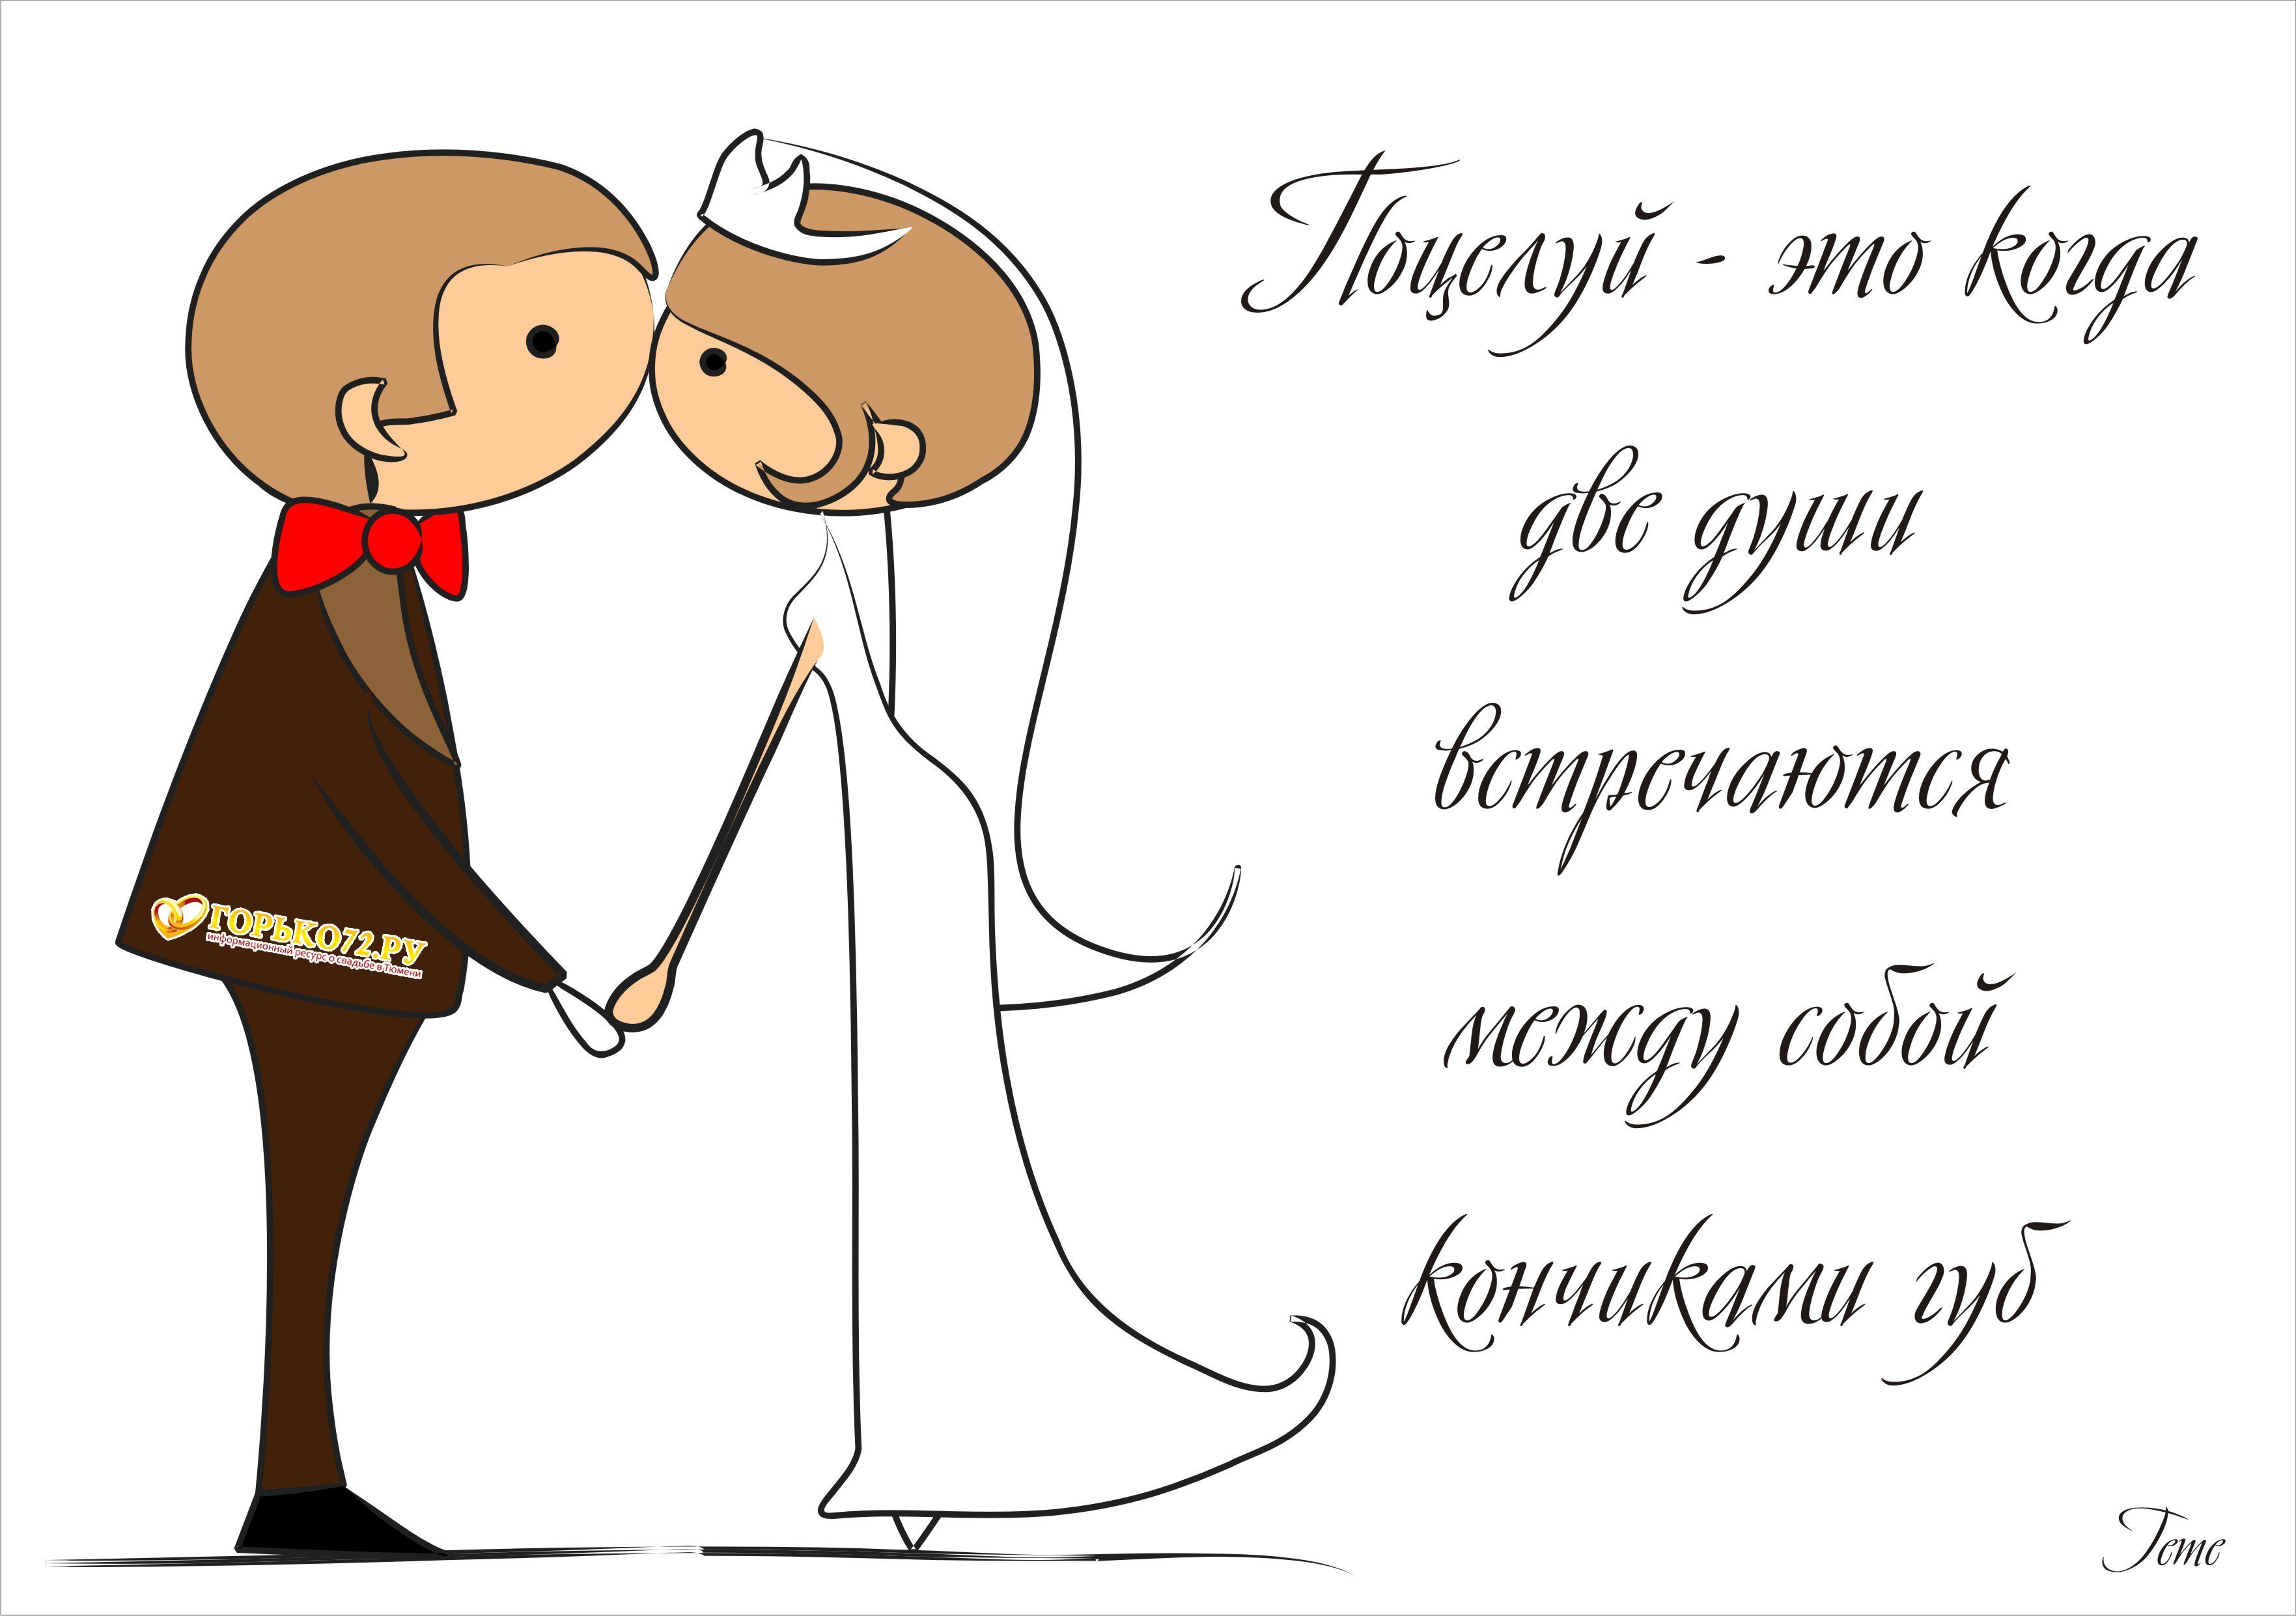 Плакат с днем свадьбы